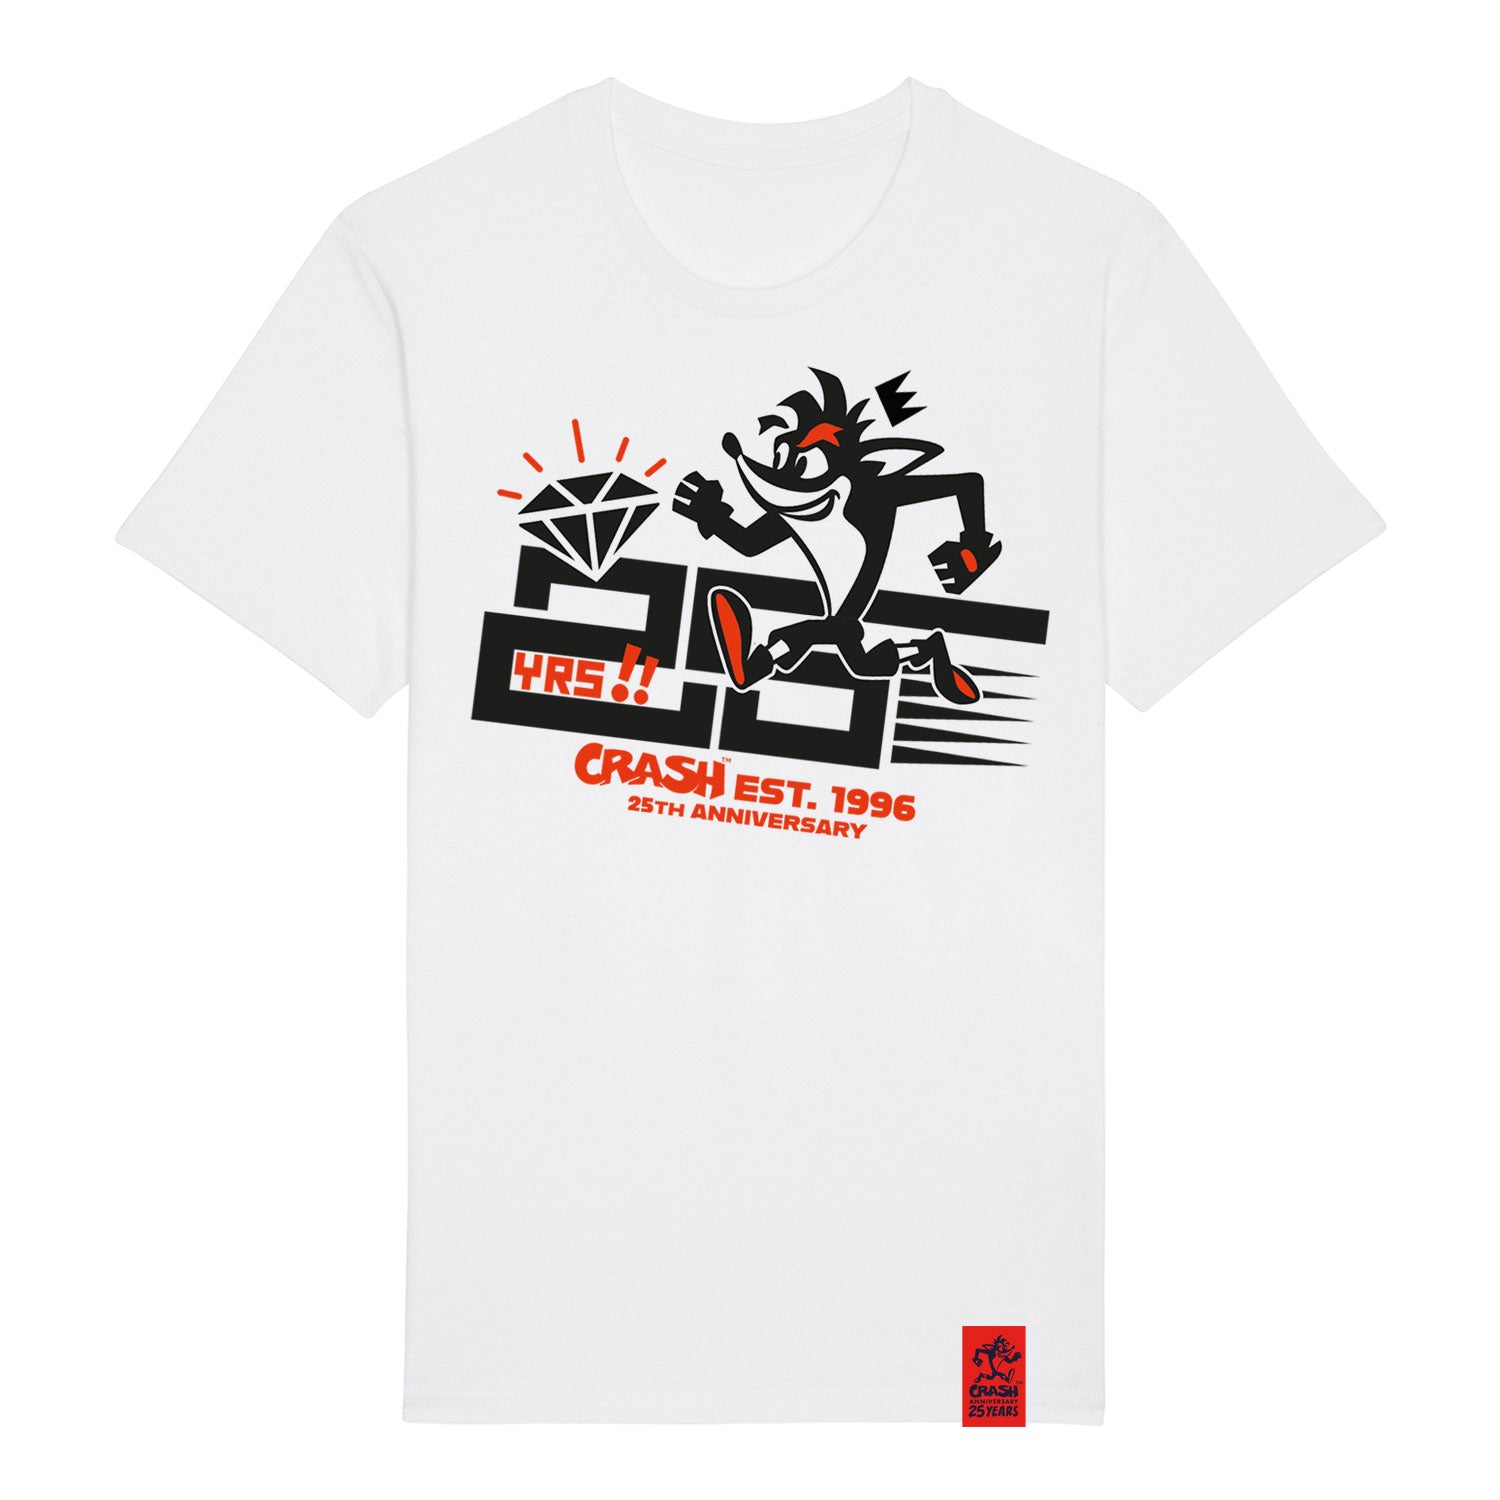 Crash Bandicoot 25th Anniversary T-shirt, Casual Fit White Tee